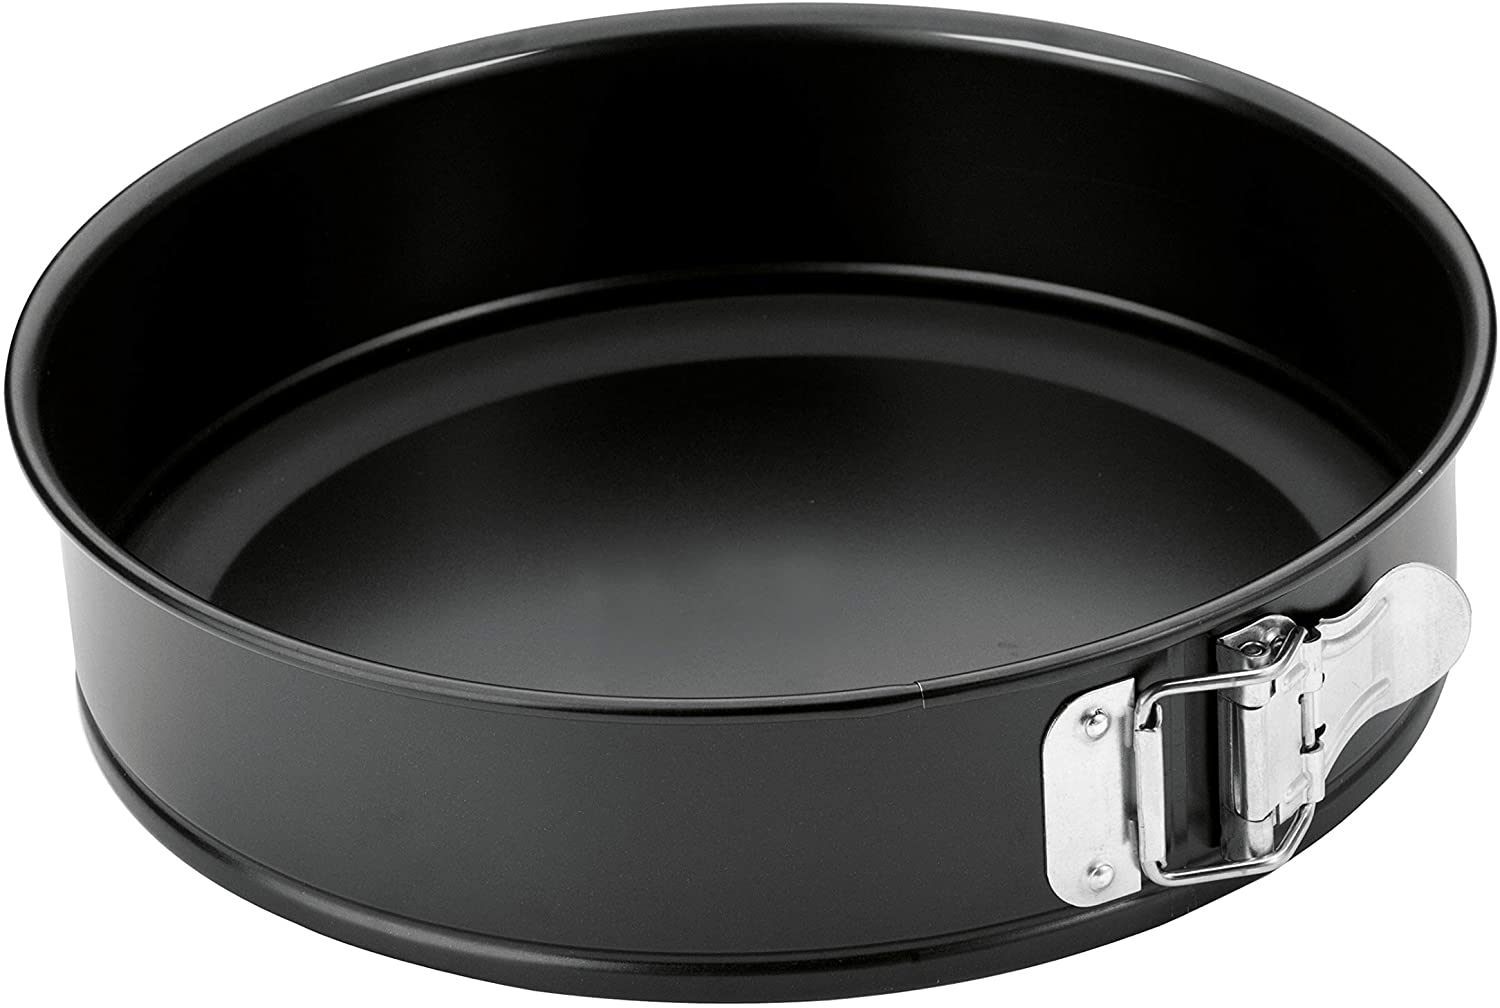 Tescoma Delicia cake pan, 1 shelf, diameter 24cm, black